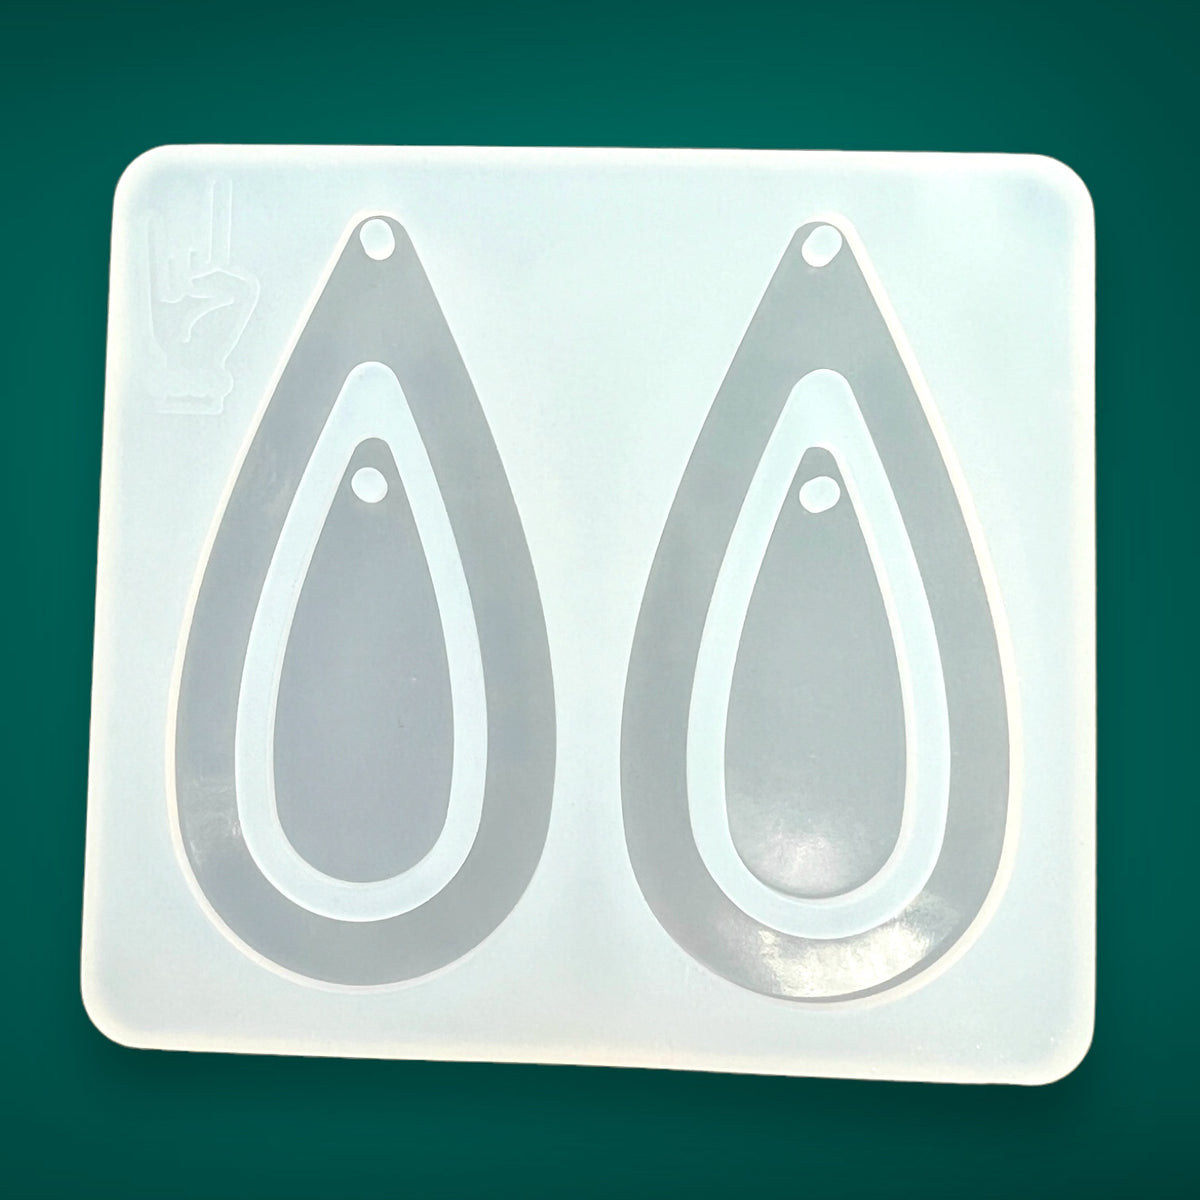 Resin Rockers Exclusive Premium Dual Slim Teardrop Dangle Earring Mold for UV and Epoxy Resin Art Jewelry